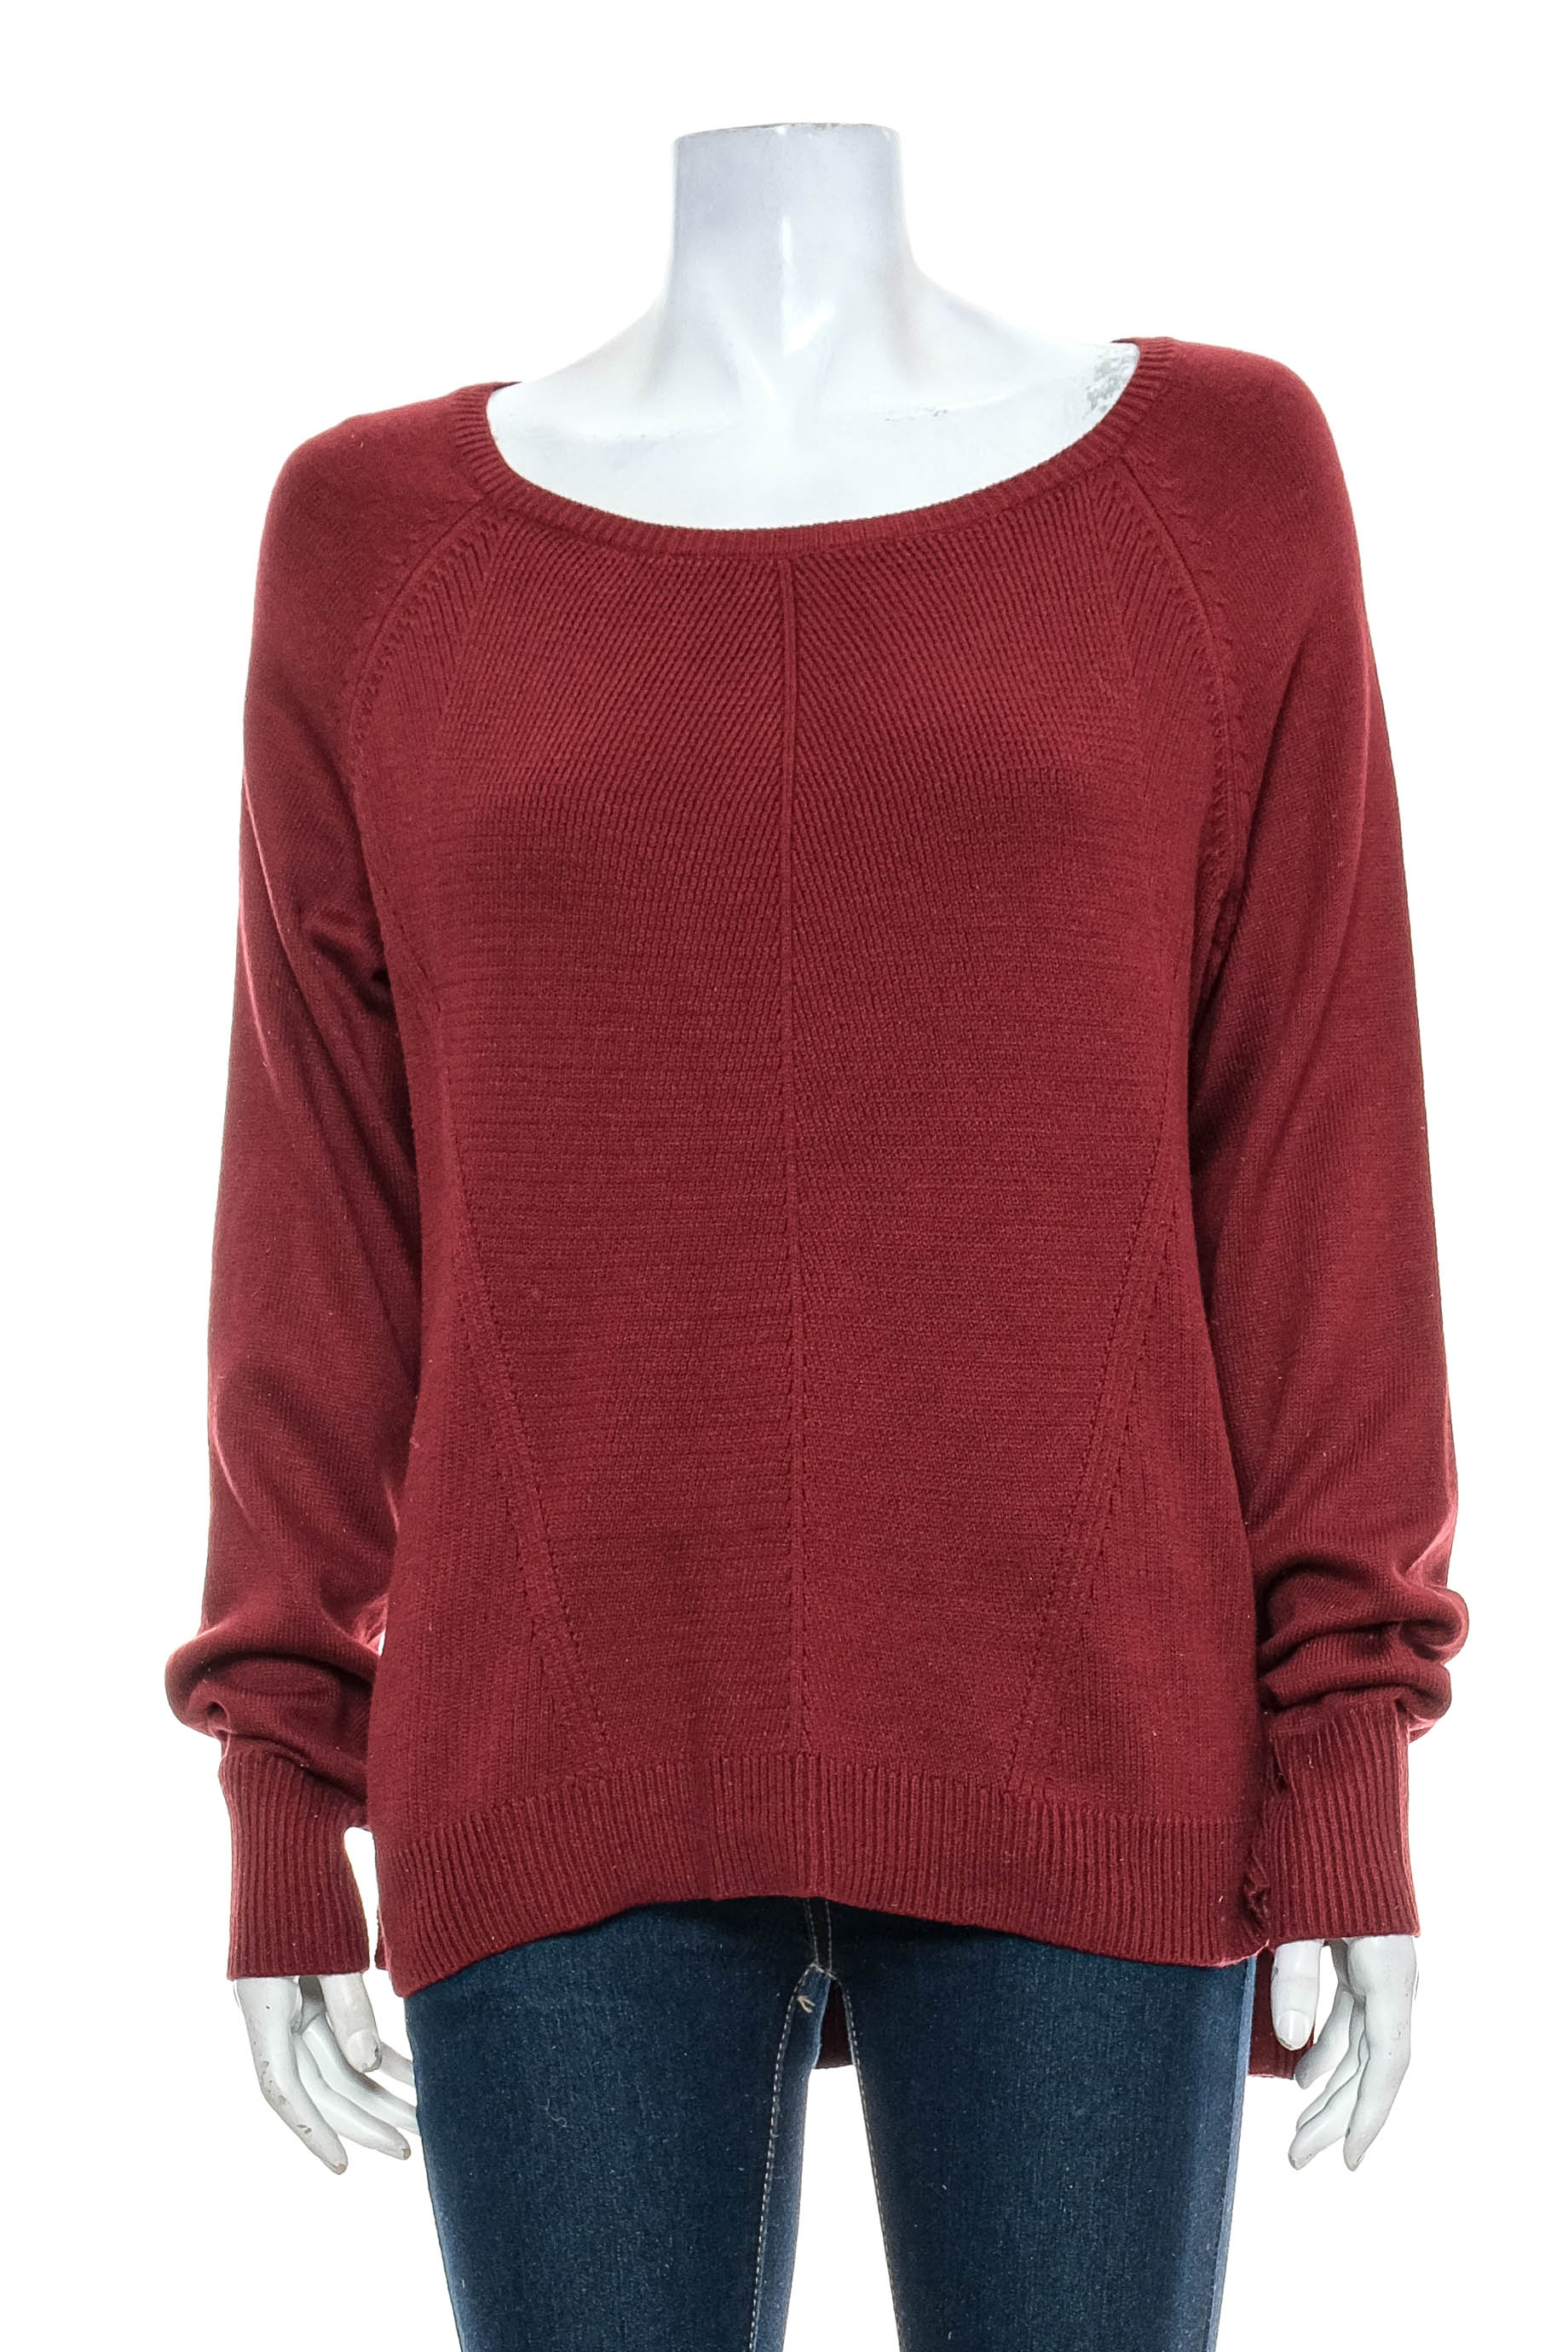 Women's sweater - Reitmans - 0